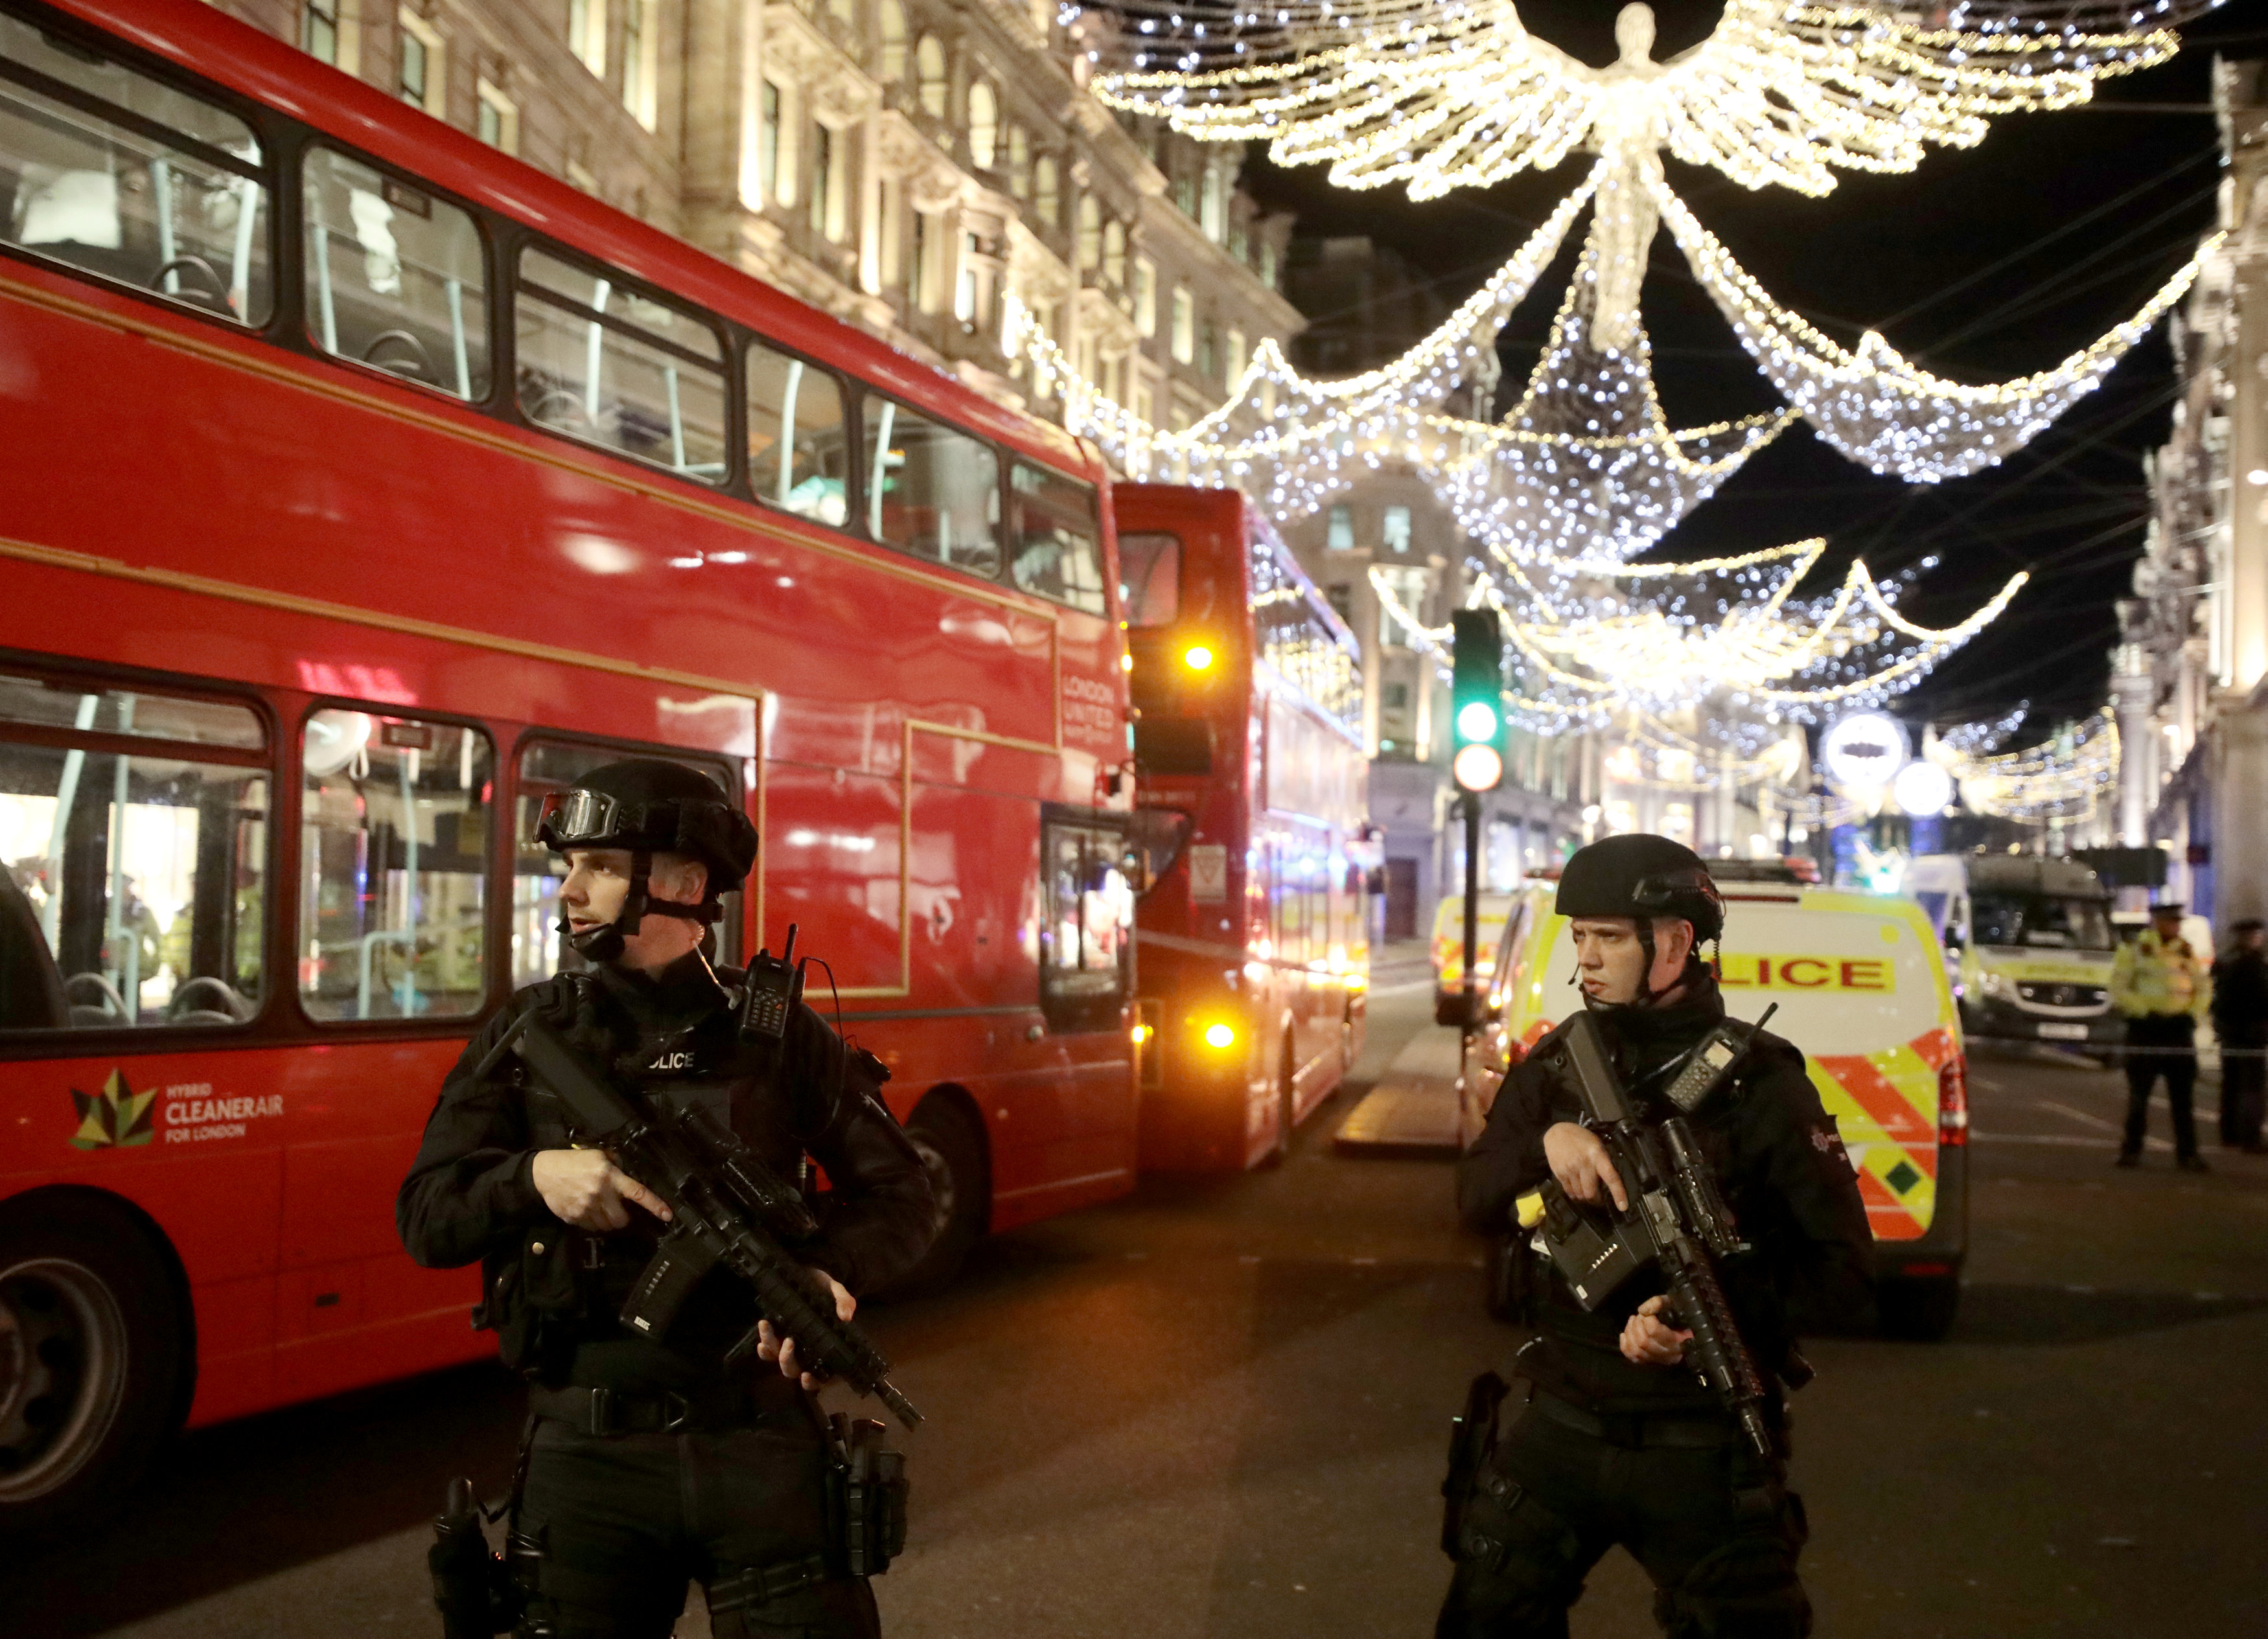 16 hurt fleeing false terror alert in London's Oxford Street